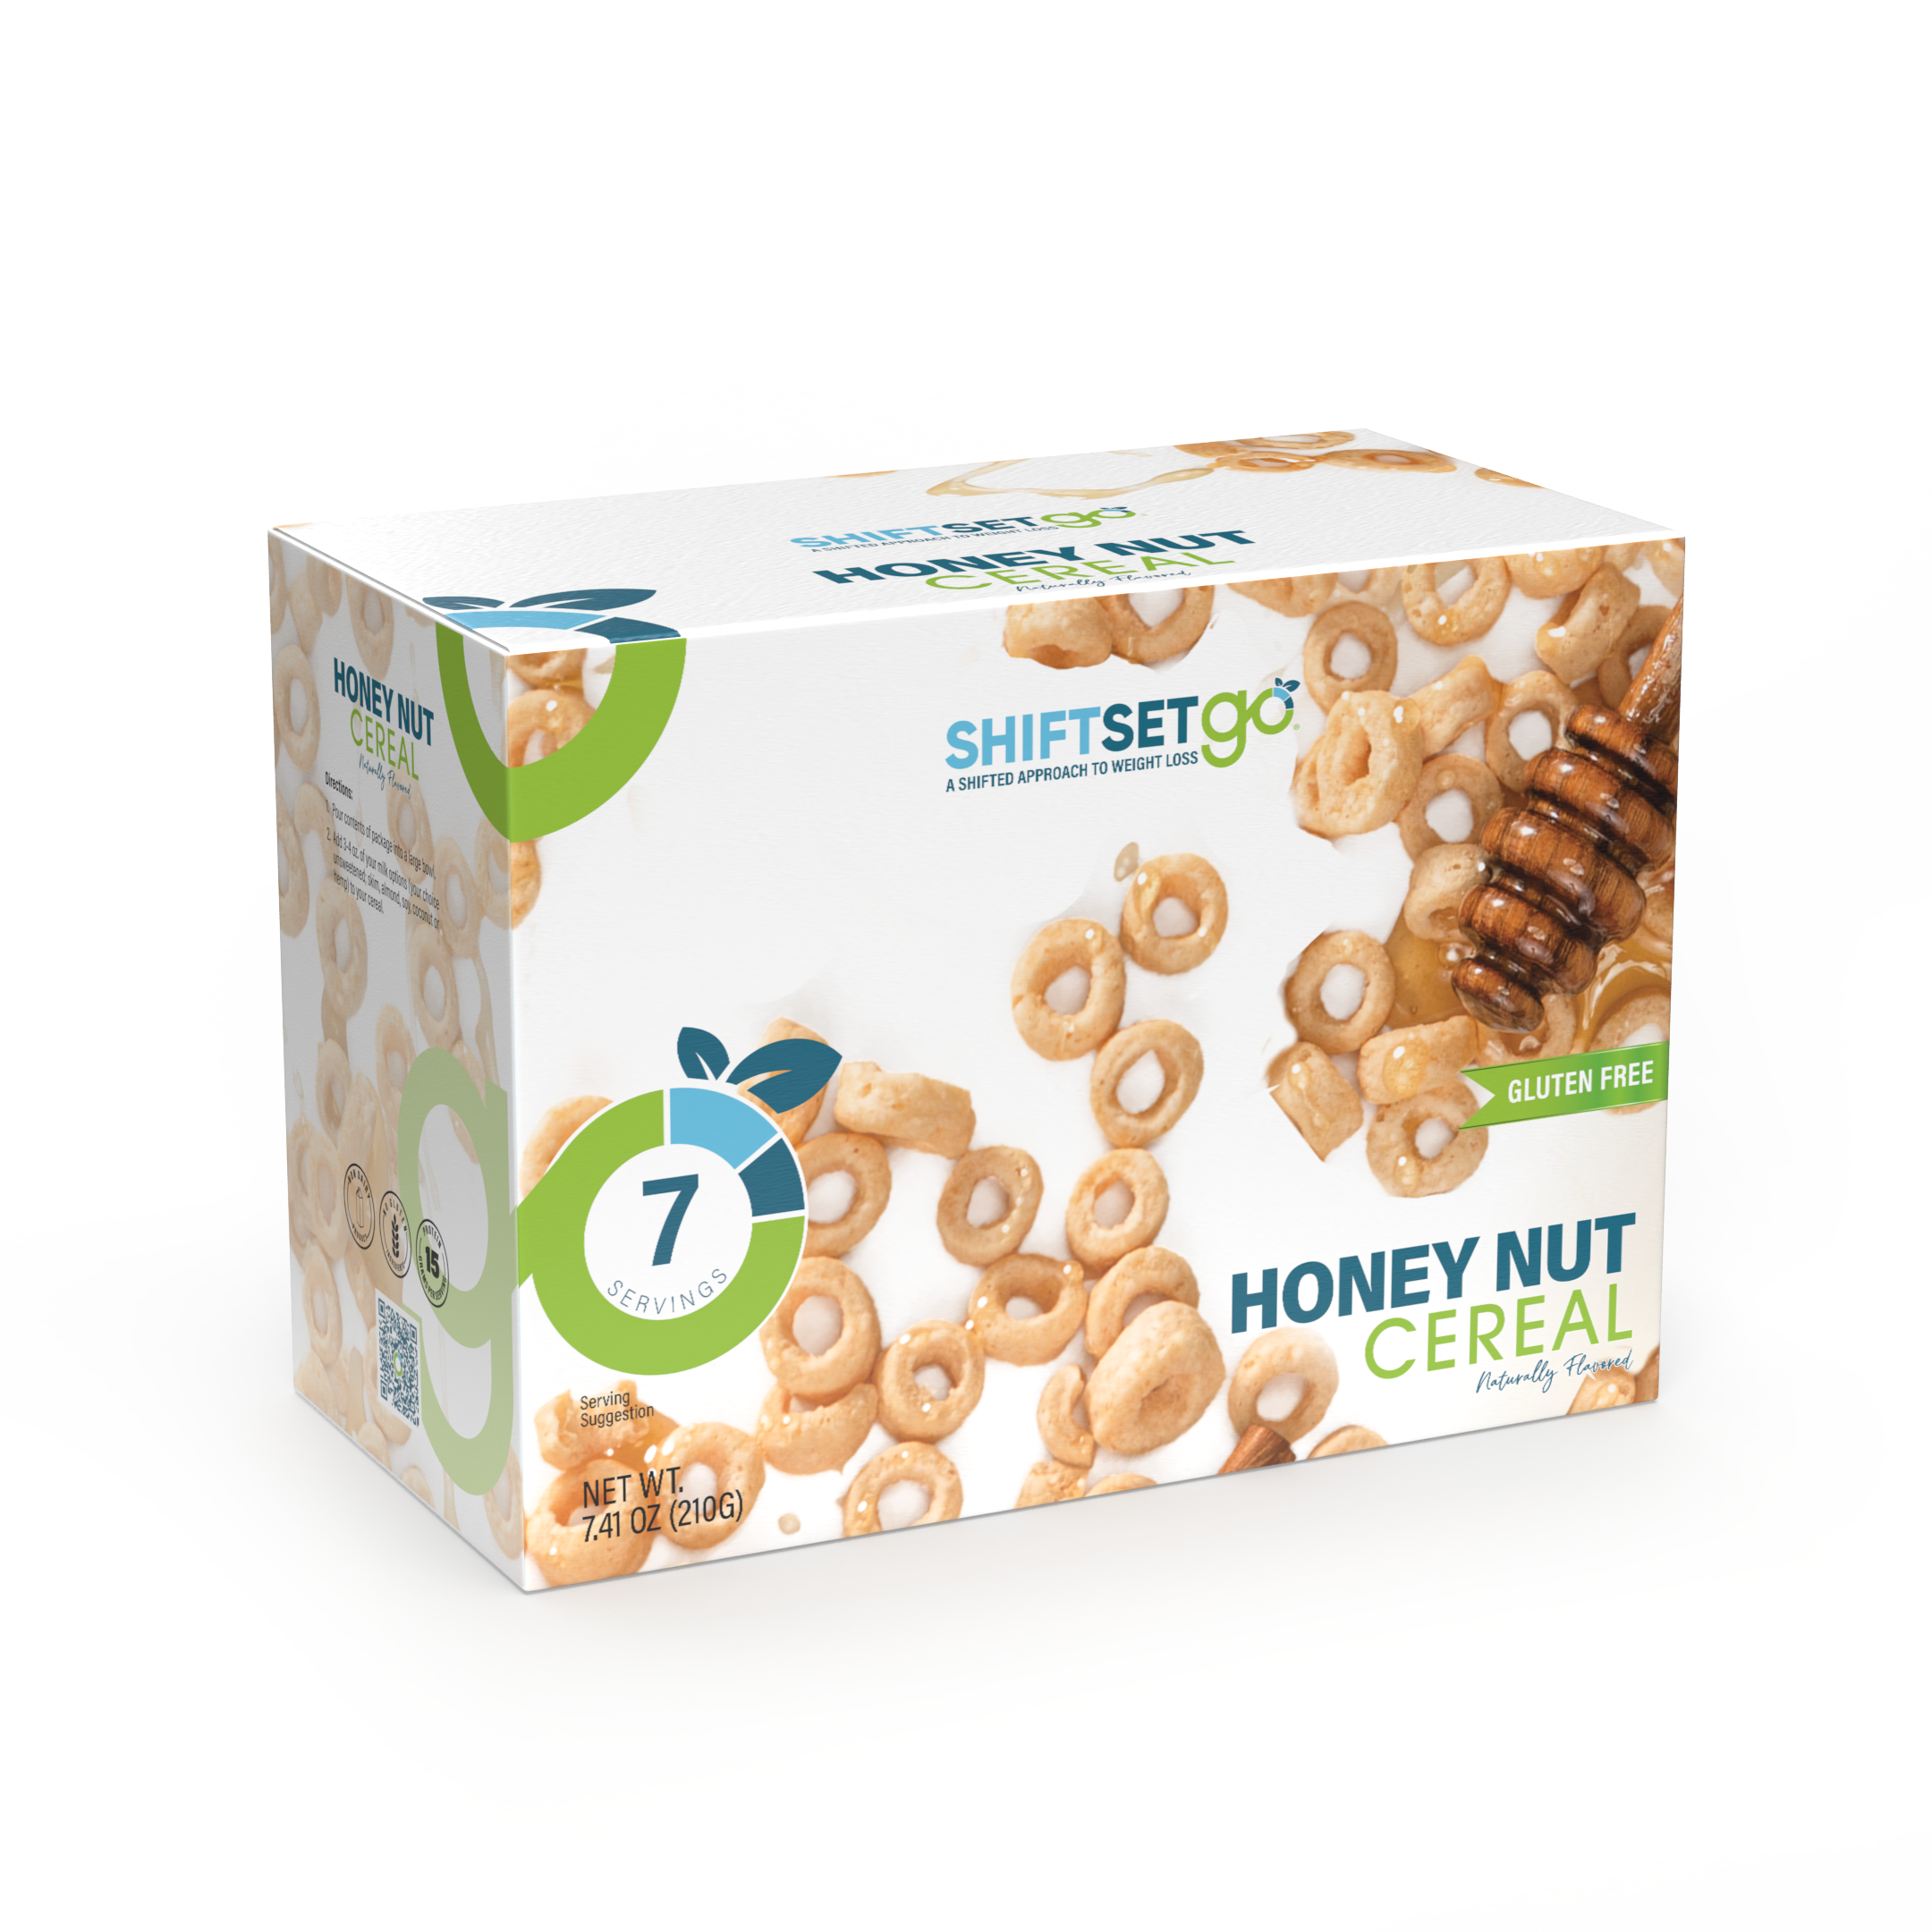 Honey Nut Cereal